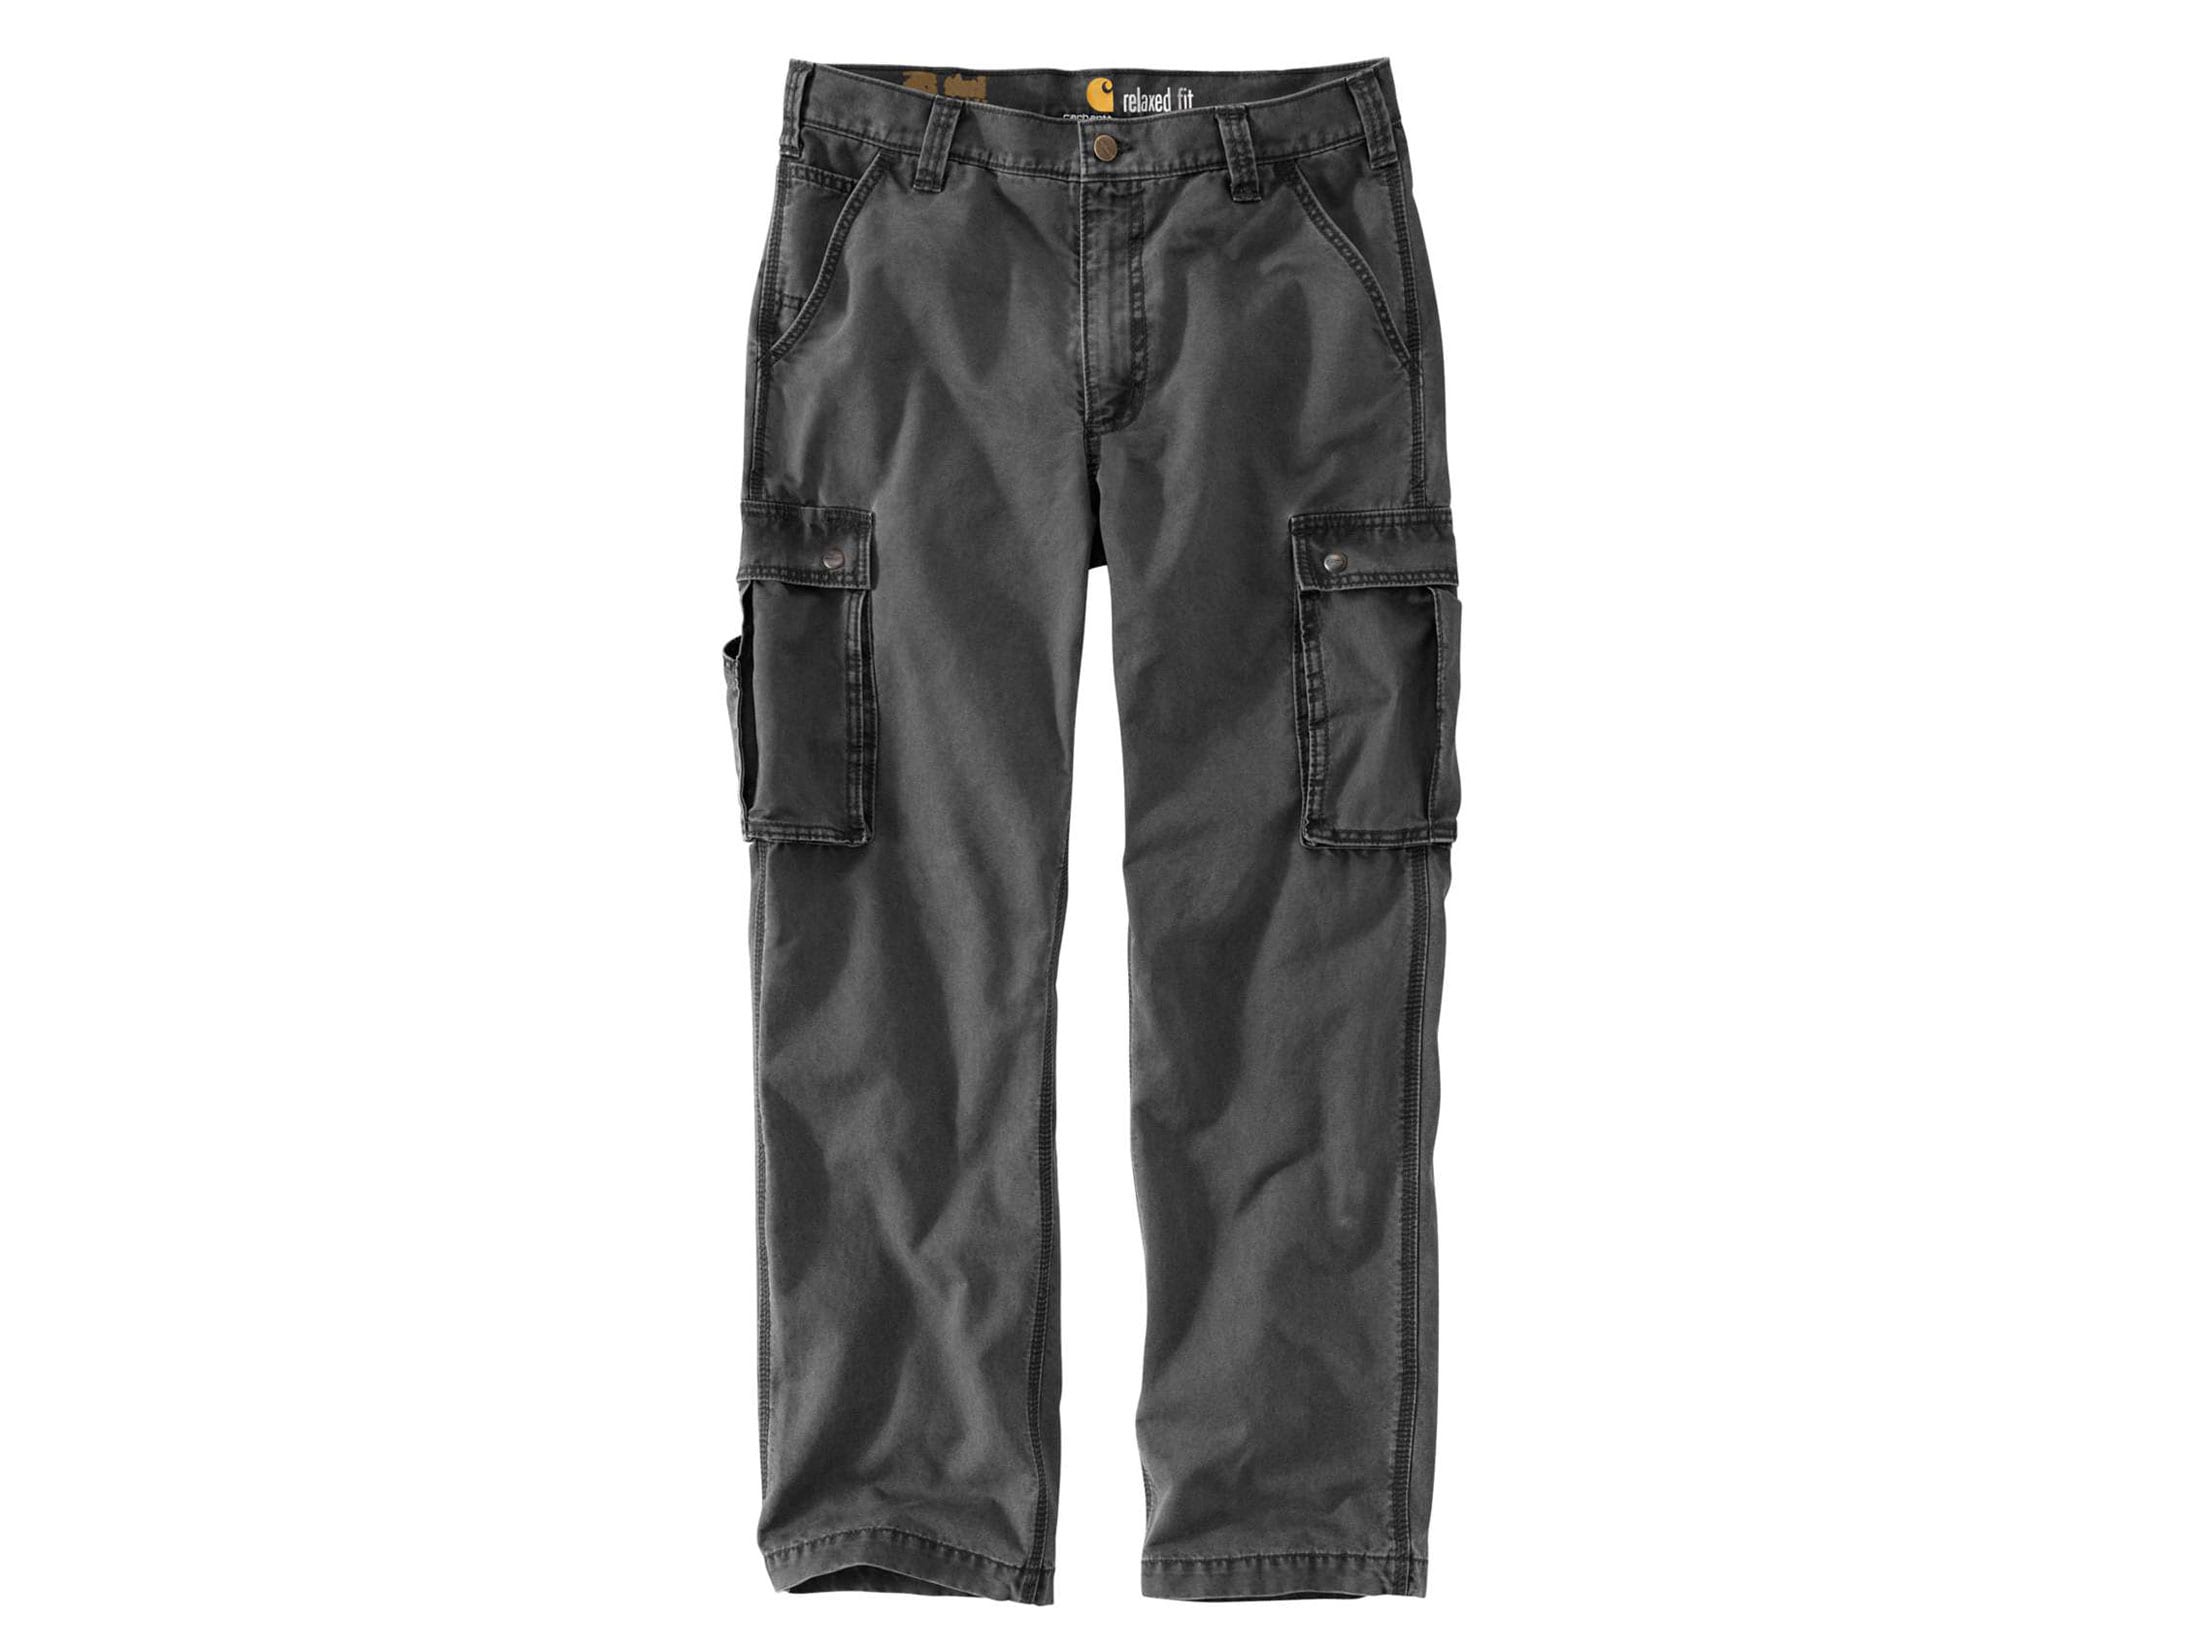 Carhartt Men's Rugged Cargo Pants Relaxed Fit Cotton Tan 38 Waist 32